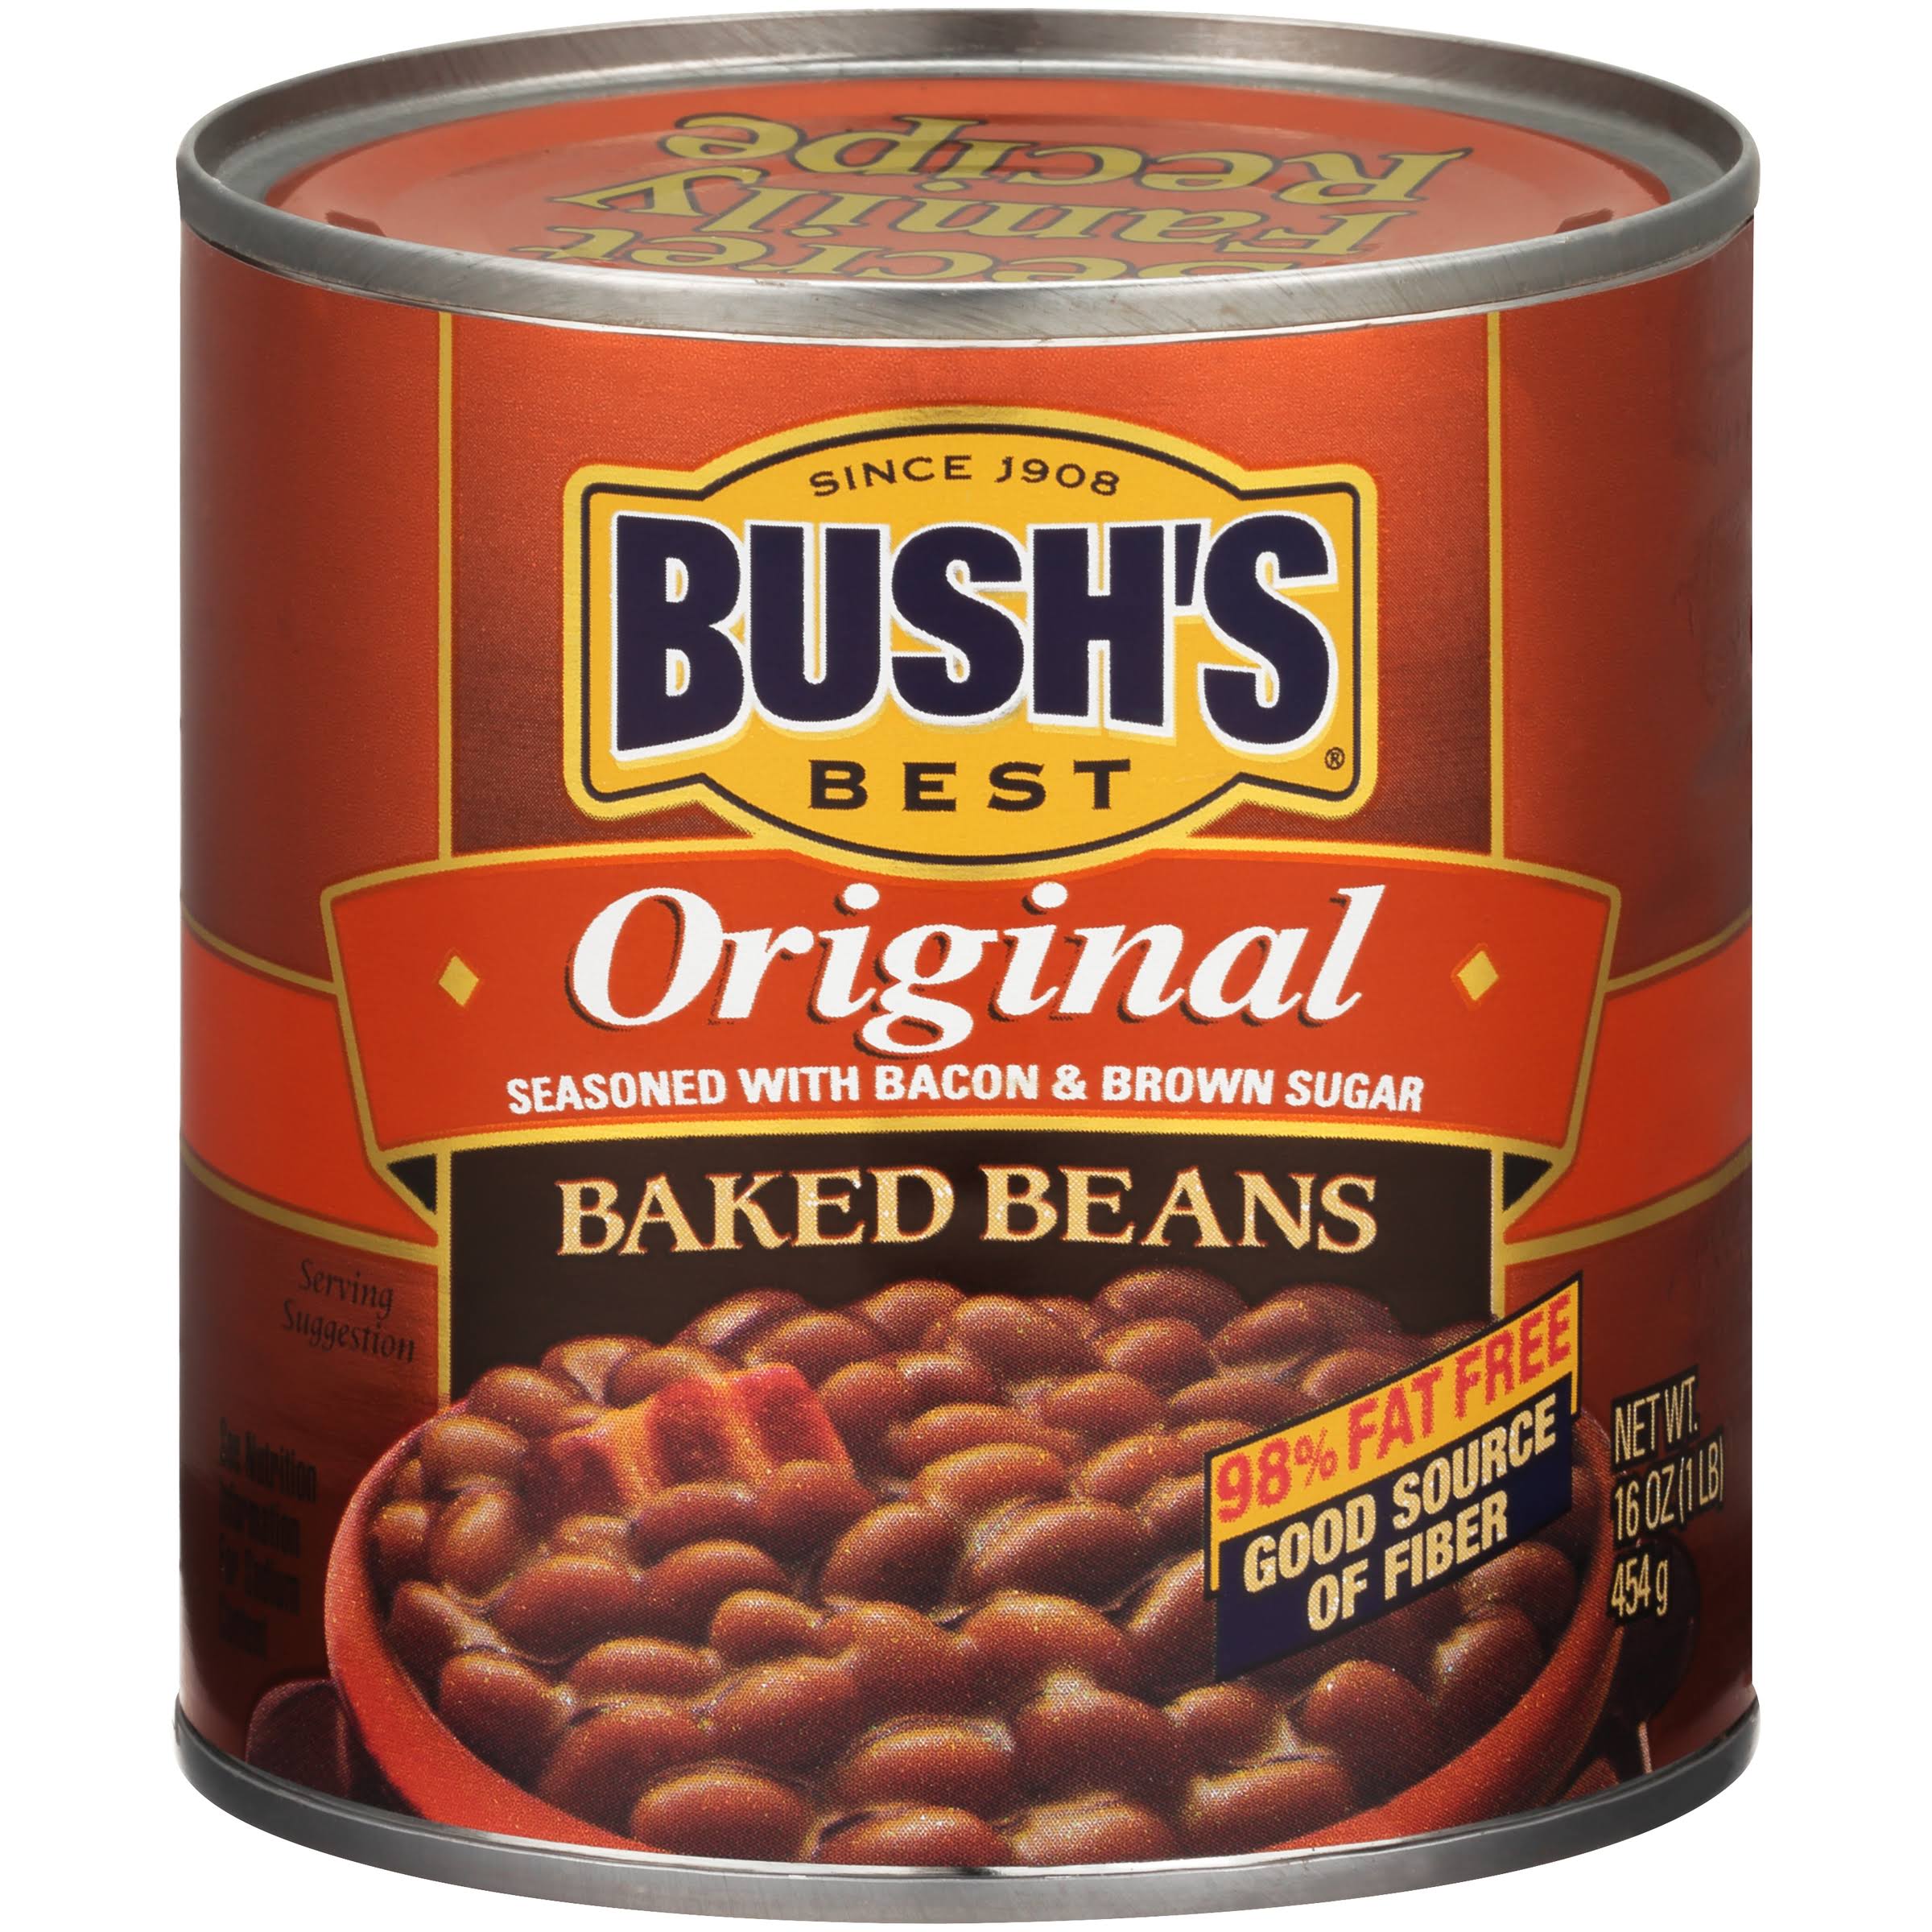 Bush's Best Original Baked Beans - 16 oz